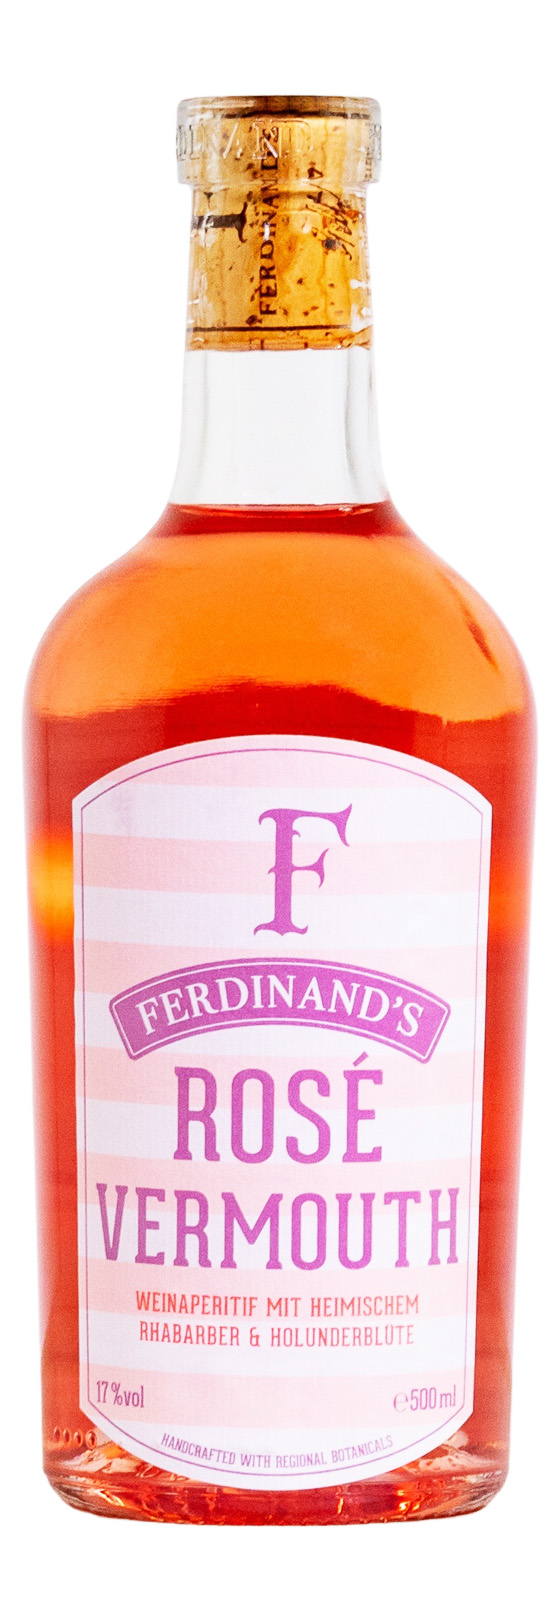 Ferdinands Rosé Vermouth - 0,5L 17% vol